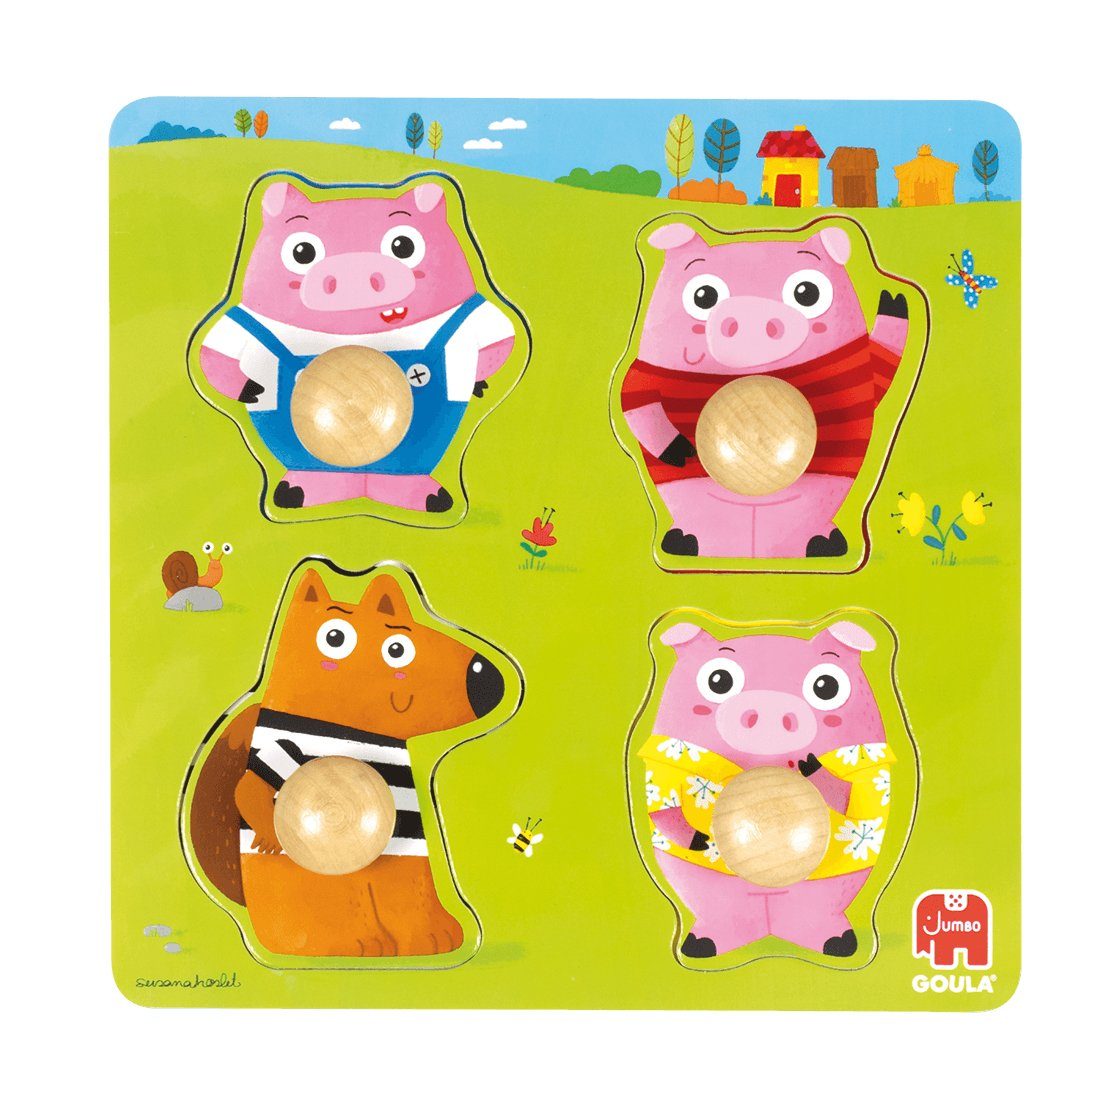 Jumbo Spiele Goula Puzzle Goula 59452 3 kleine Schweinchen 4 Teile Puzzle, 4 Puzzleteile, Made in Europe